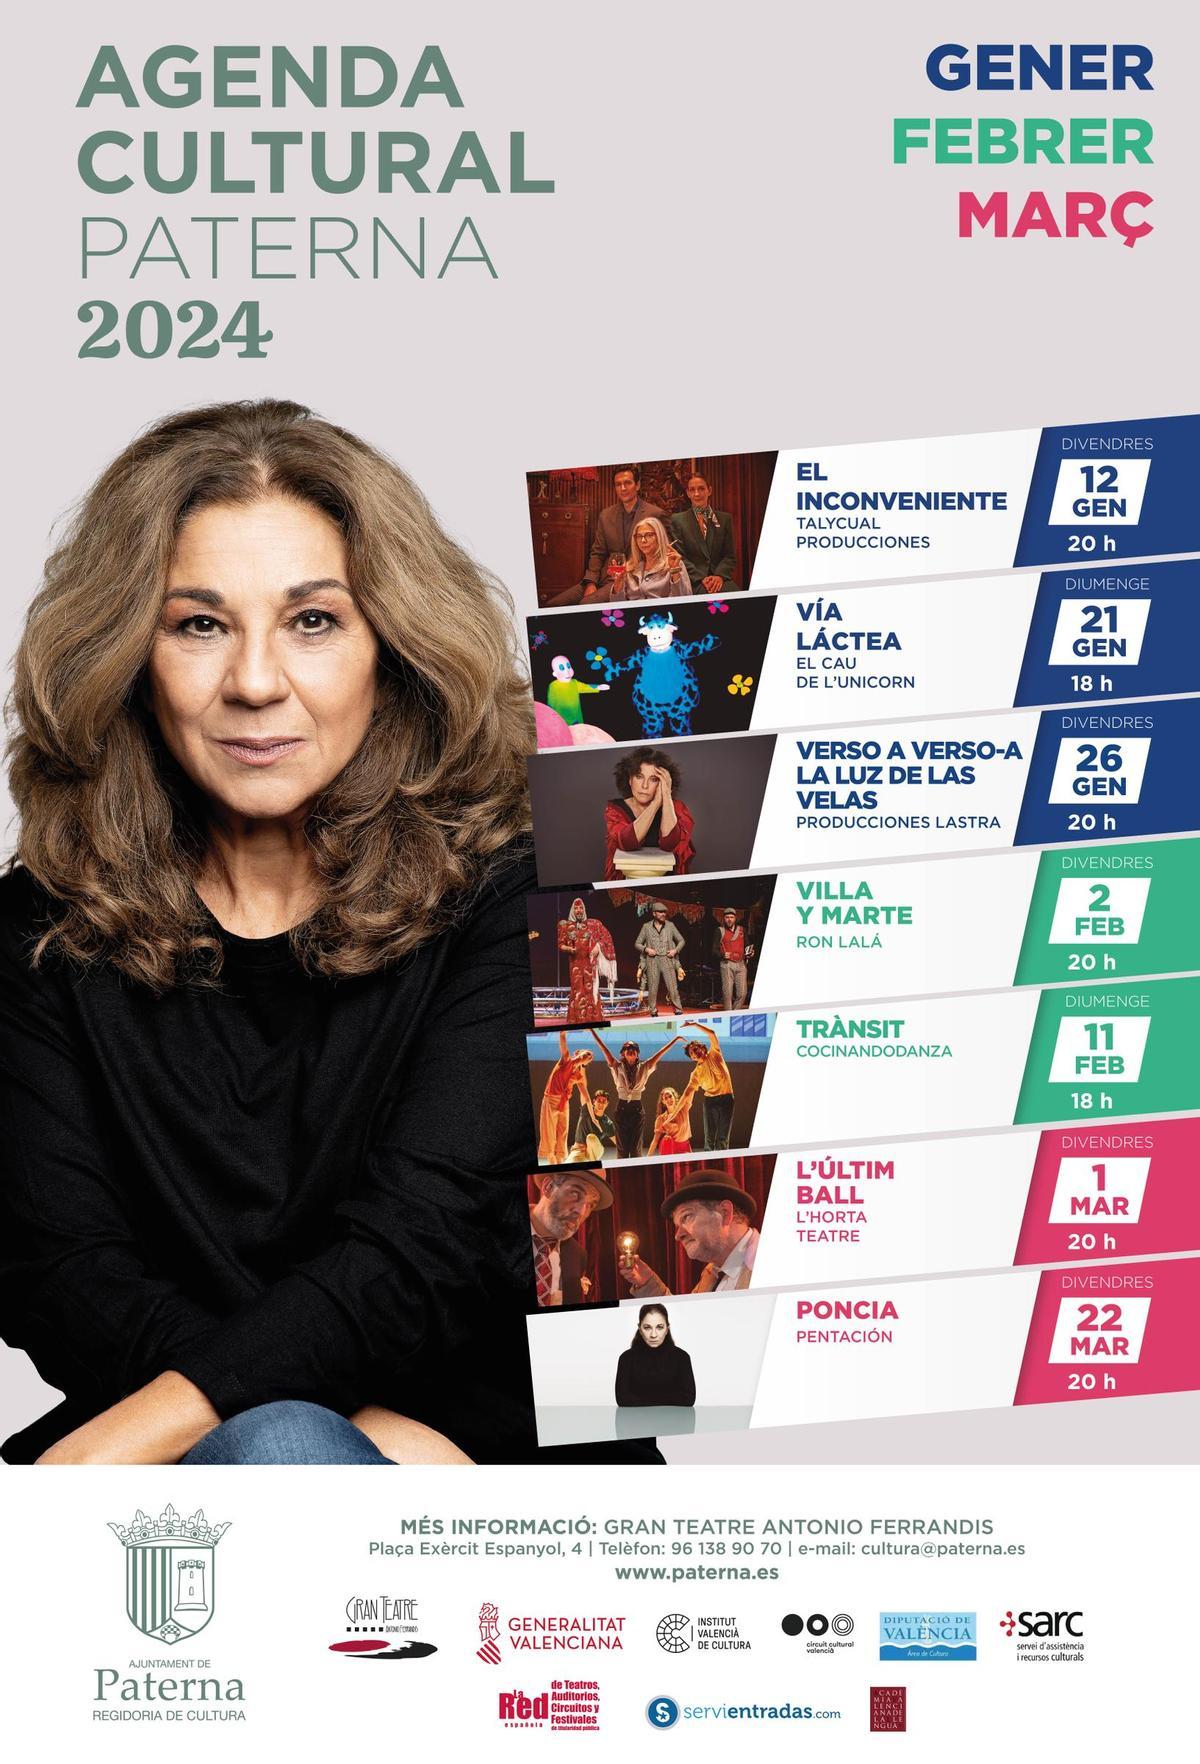 Agenda cultural del Gran Teatre Antonio Ferrandis para el primer trimestre de 2024.